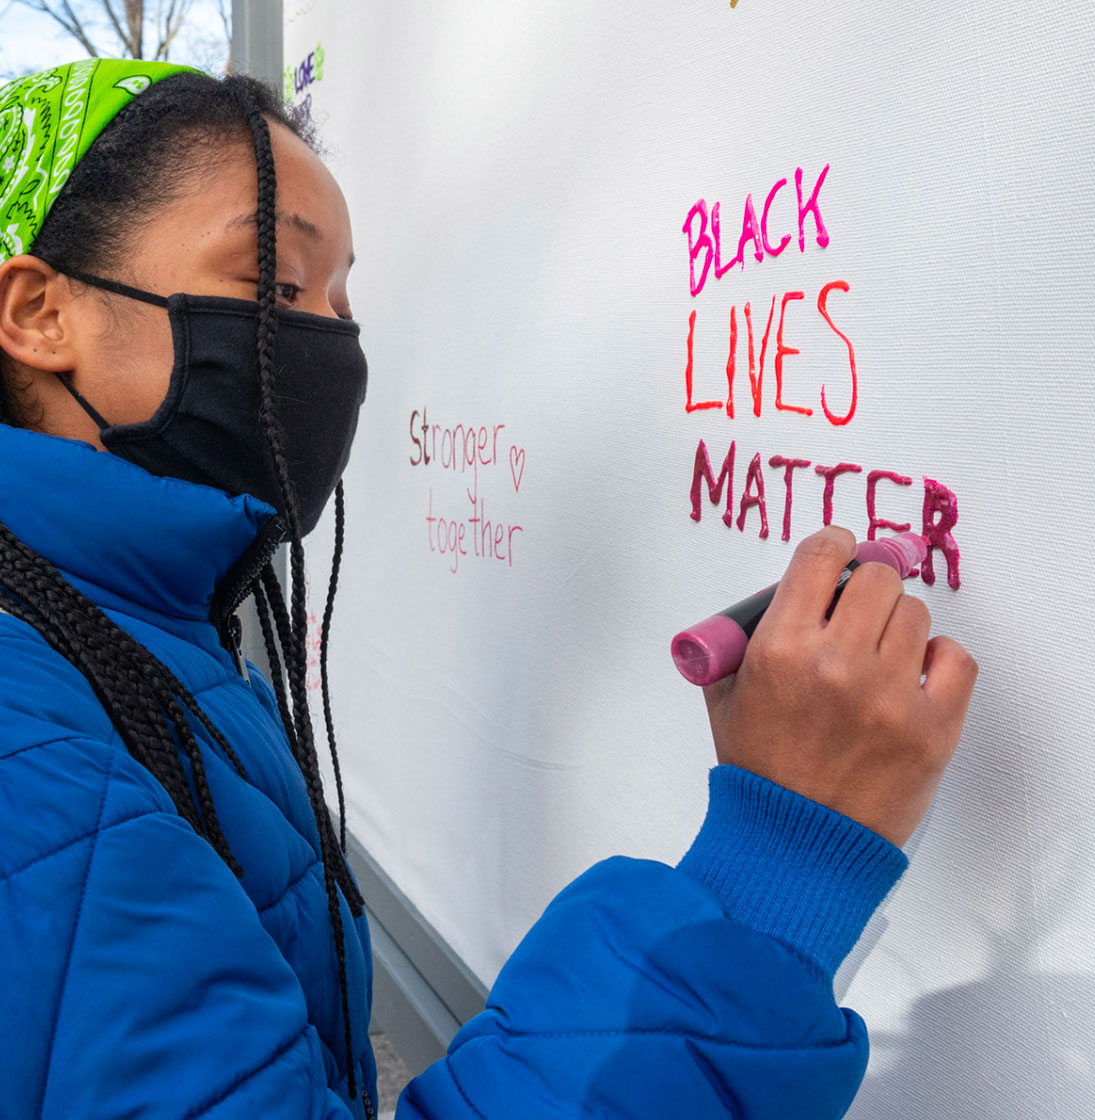 A girl writes "Black Lives Matter" on a board